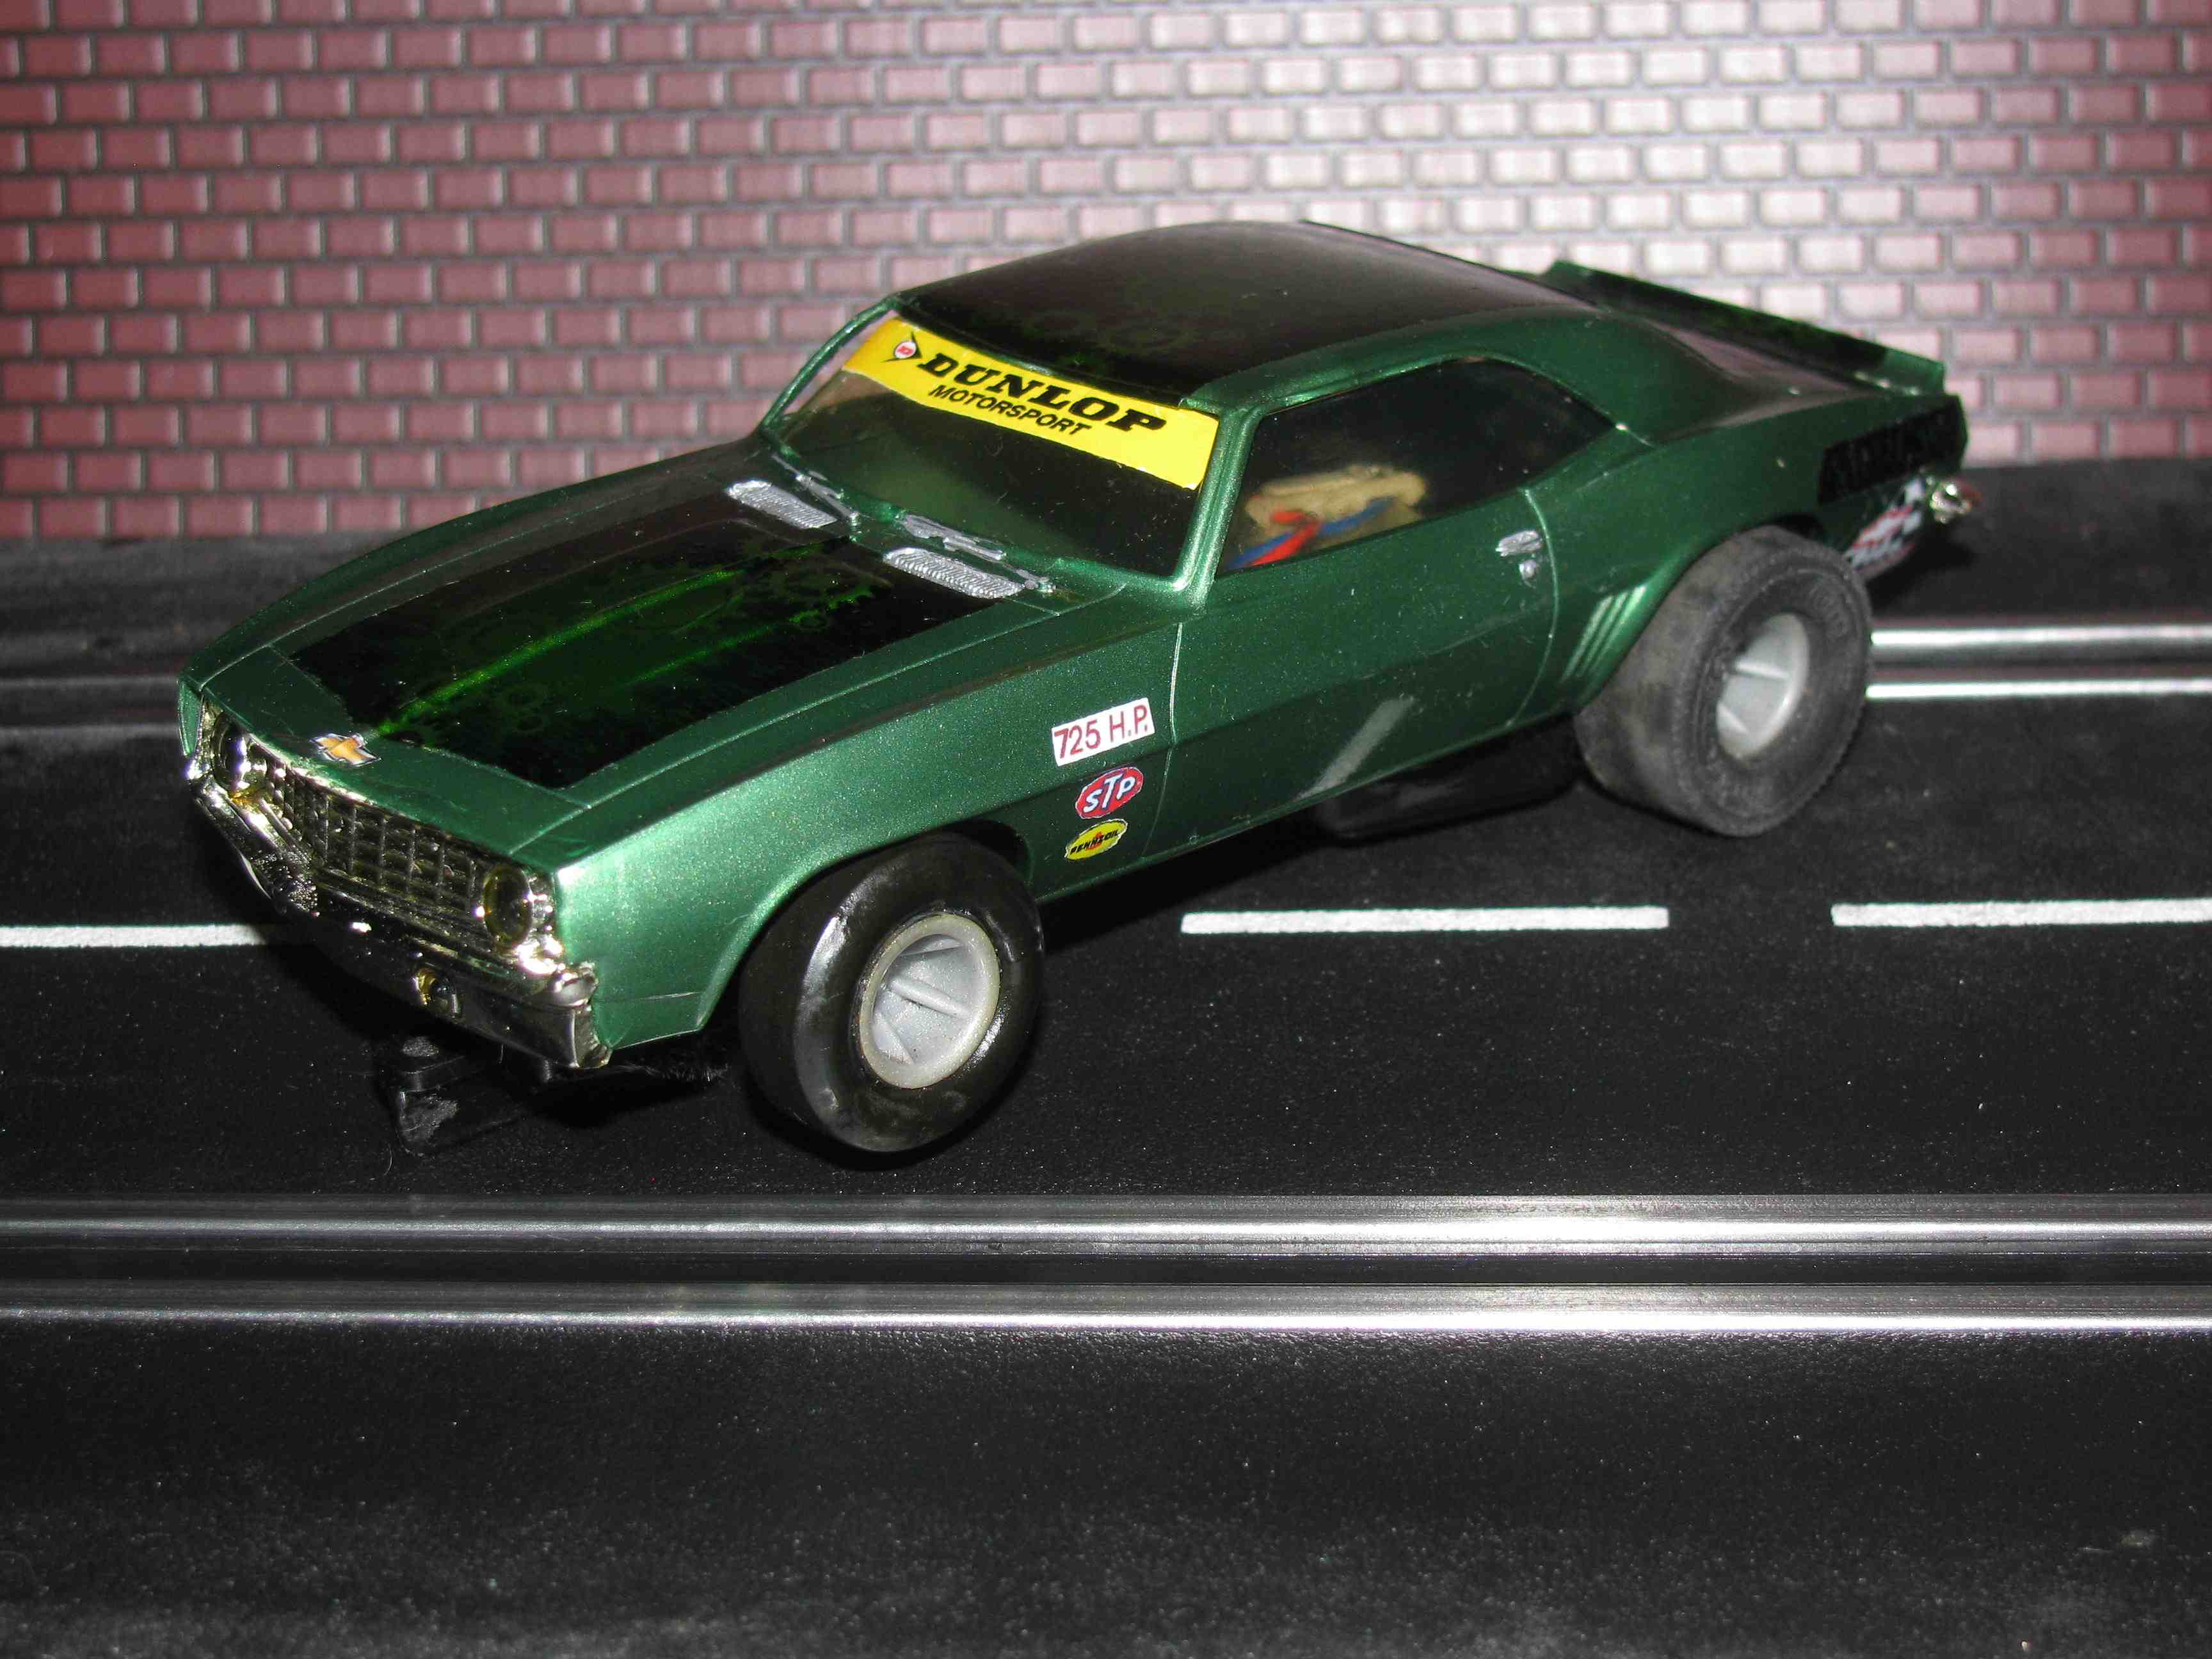 * SOLD * Eldon 1969 Camaro Green Arrow Slot Car 1/32 Scale - Car #1